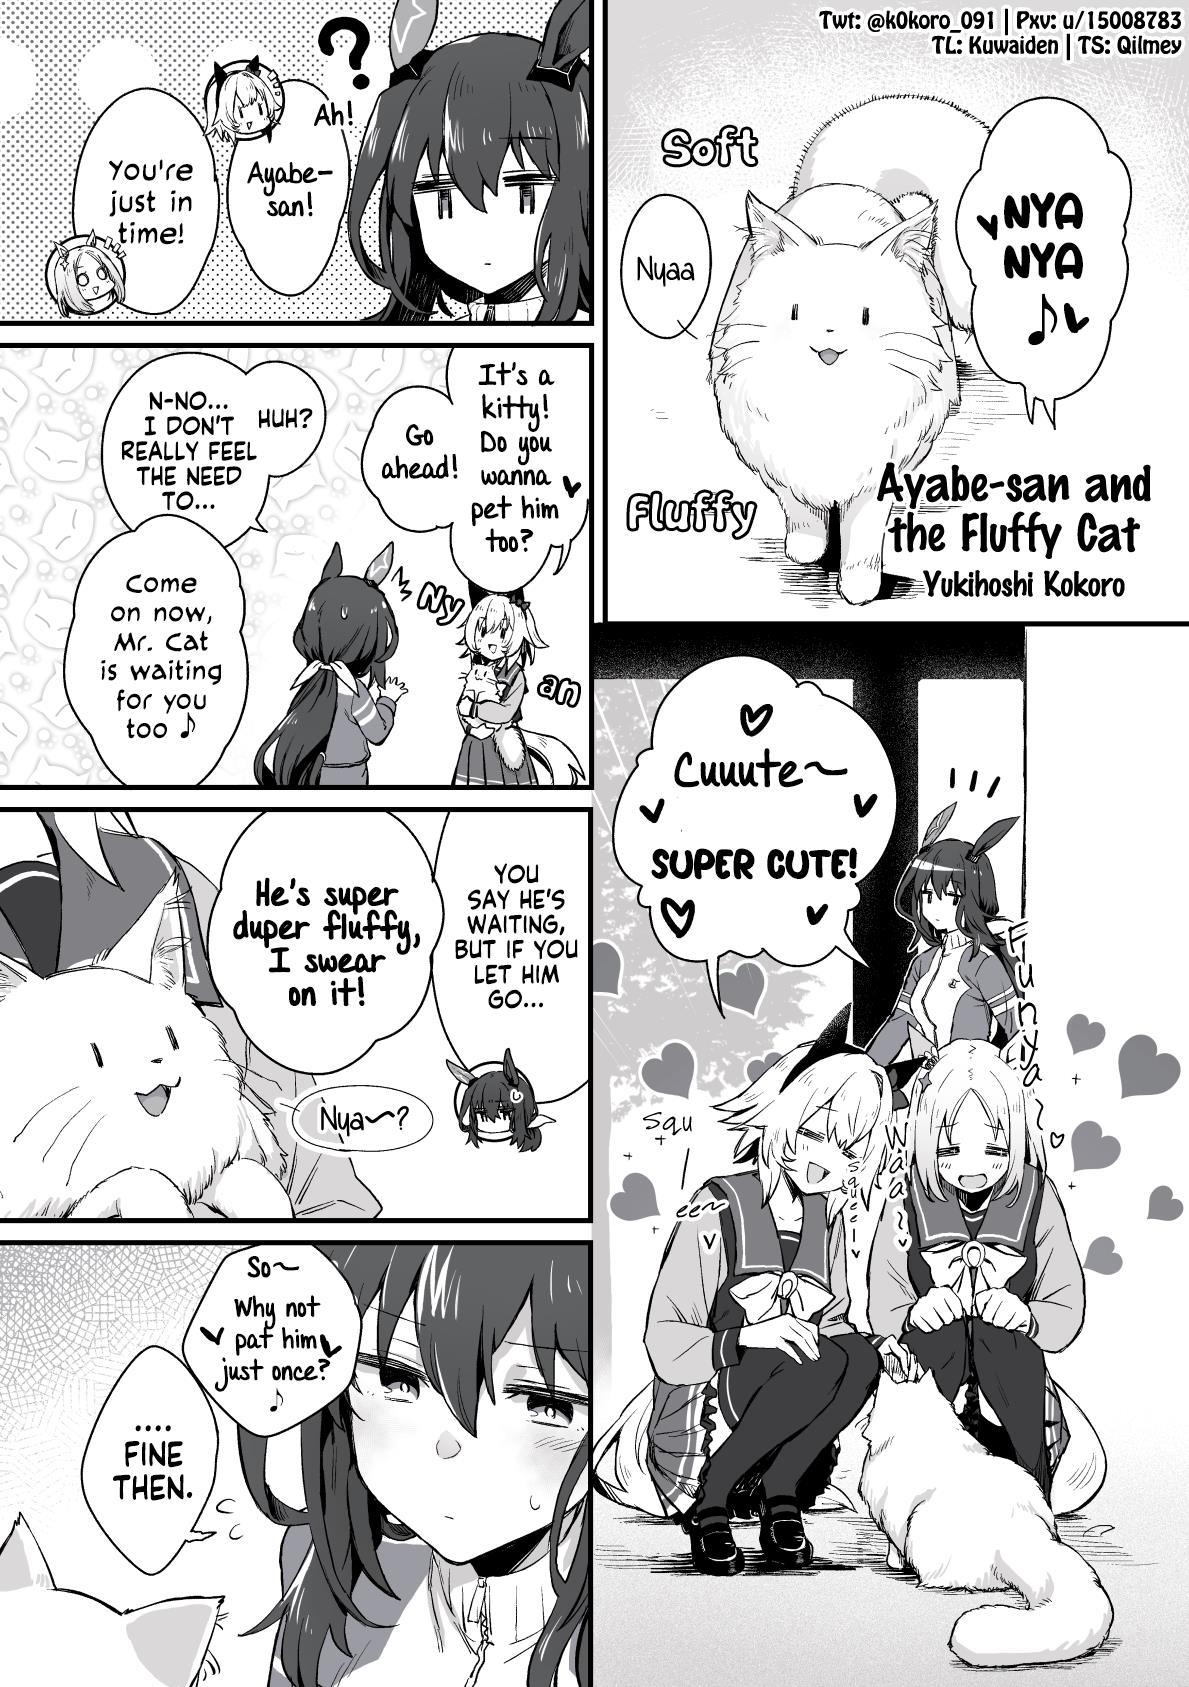 Kokoro-Sensei's Umamusume Shorts (Doujinshi) Chapter 57: Ayabe-San Cat - Picture 1